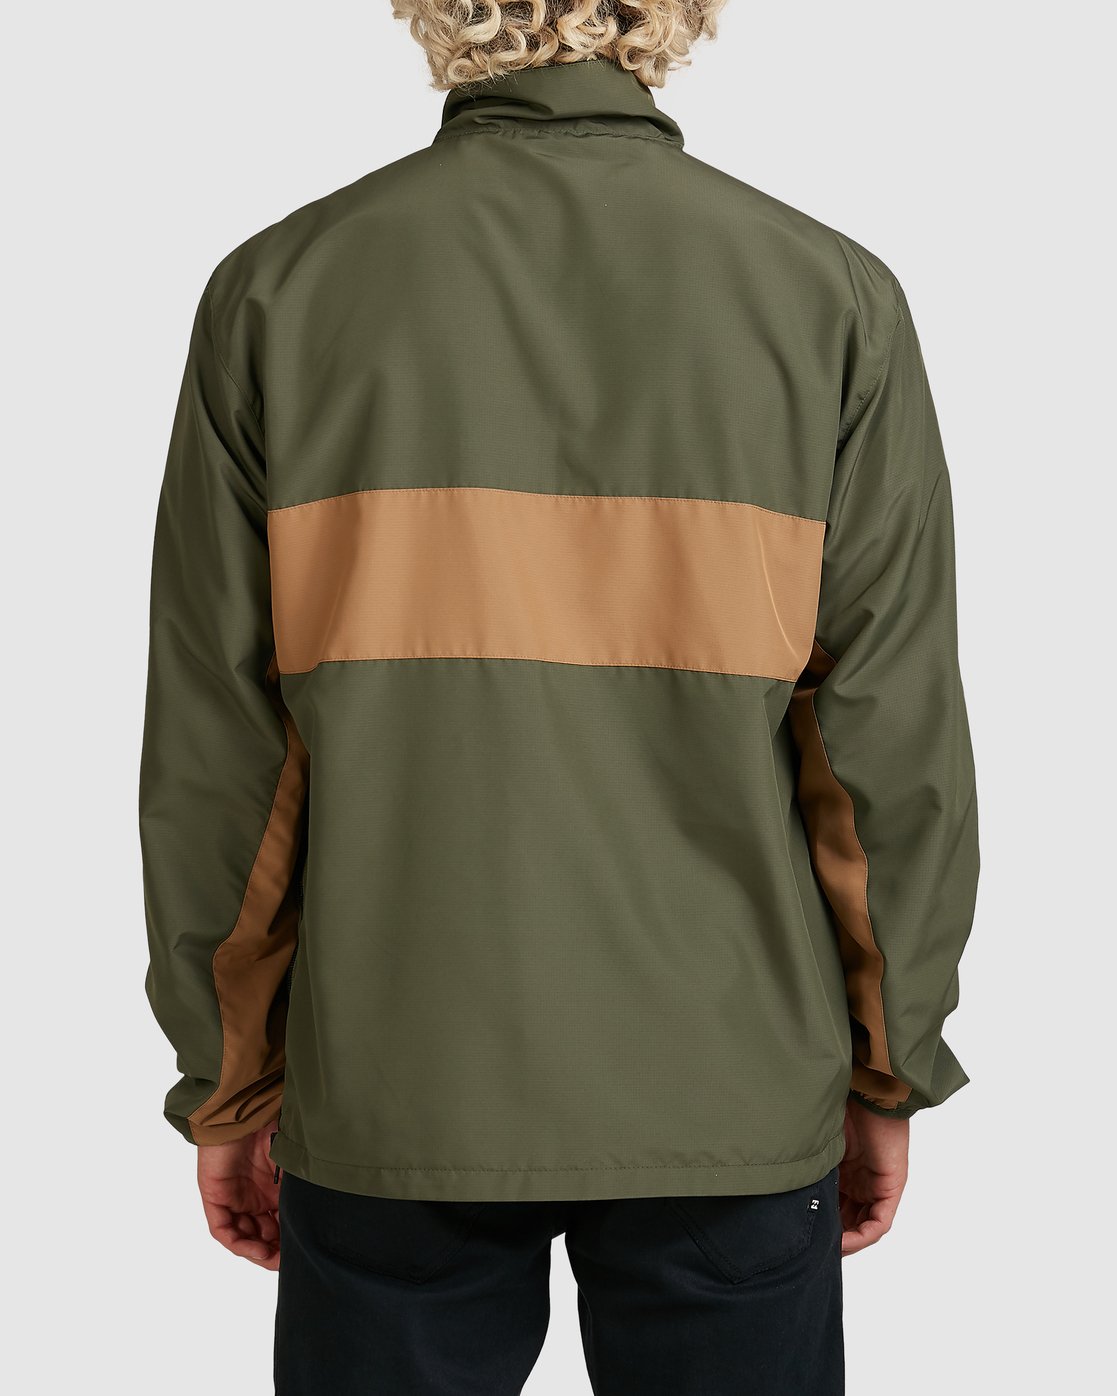 Billabong Men's Highland Reversible Jacket